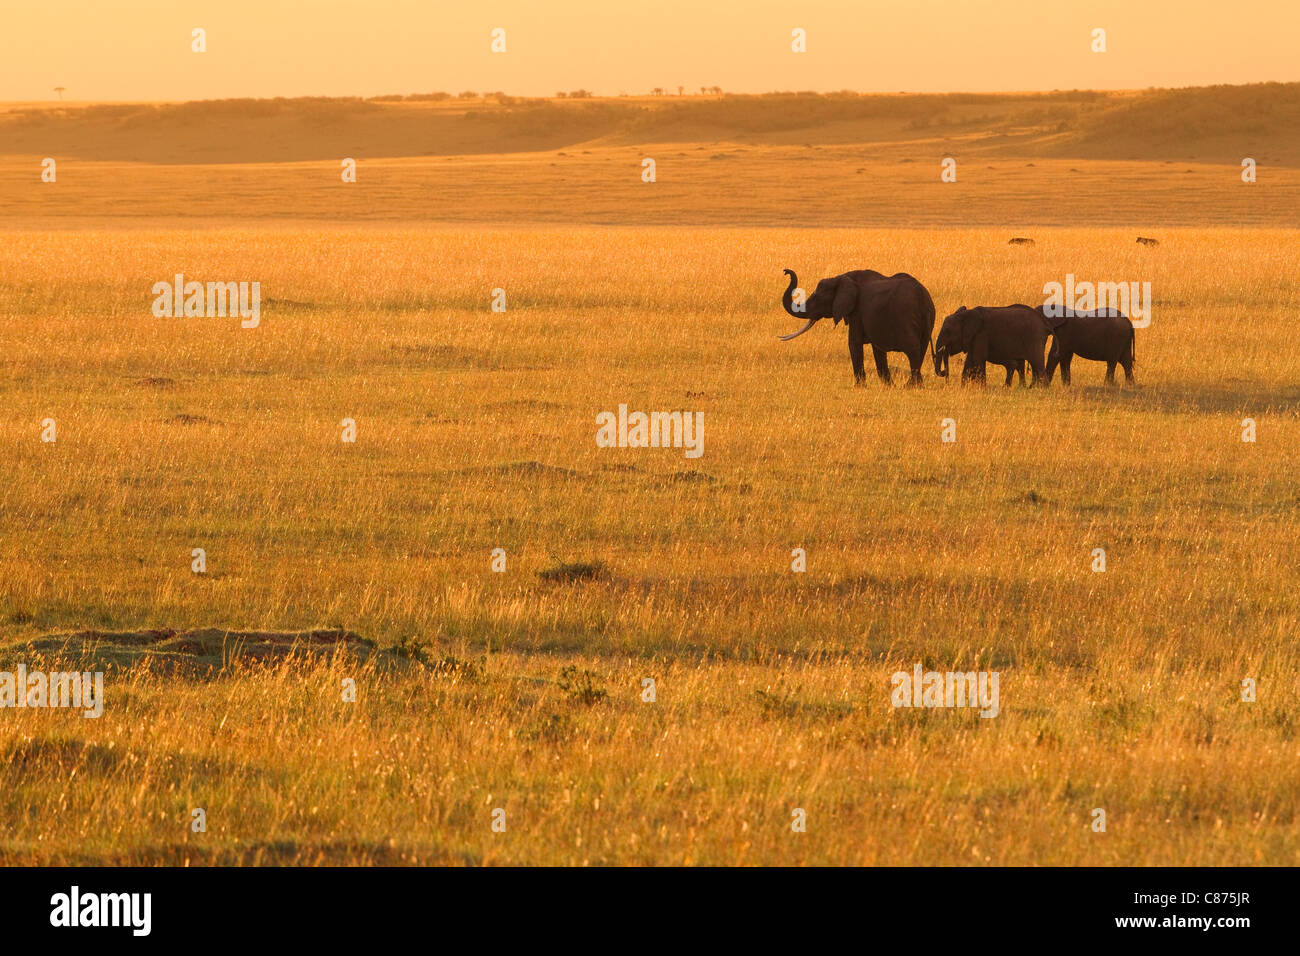 Bush africain des éléphants, Masai Mara National Reserve, Kenya Banque D'Images